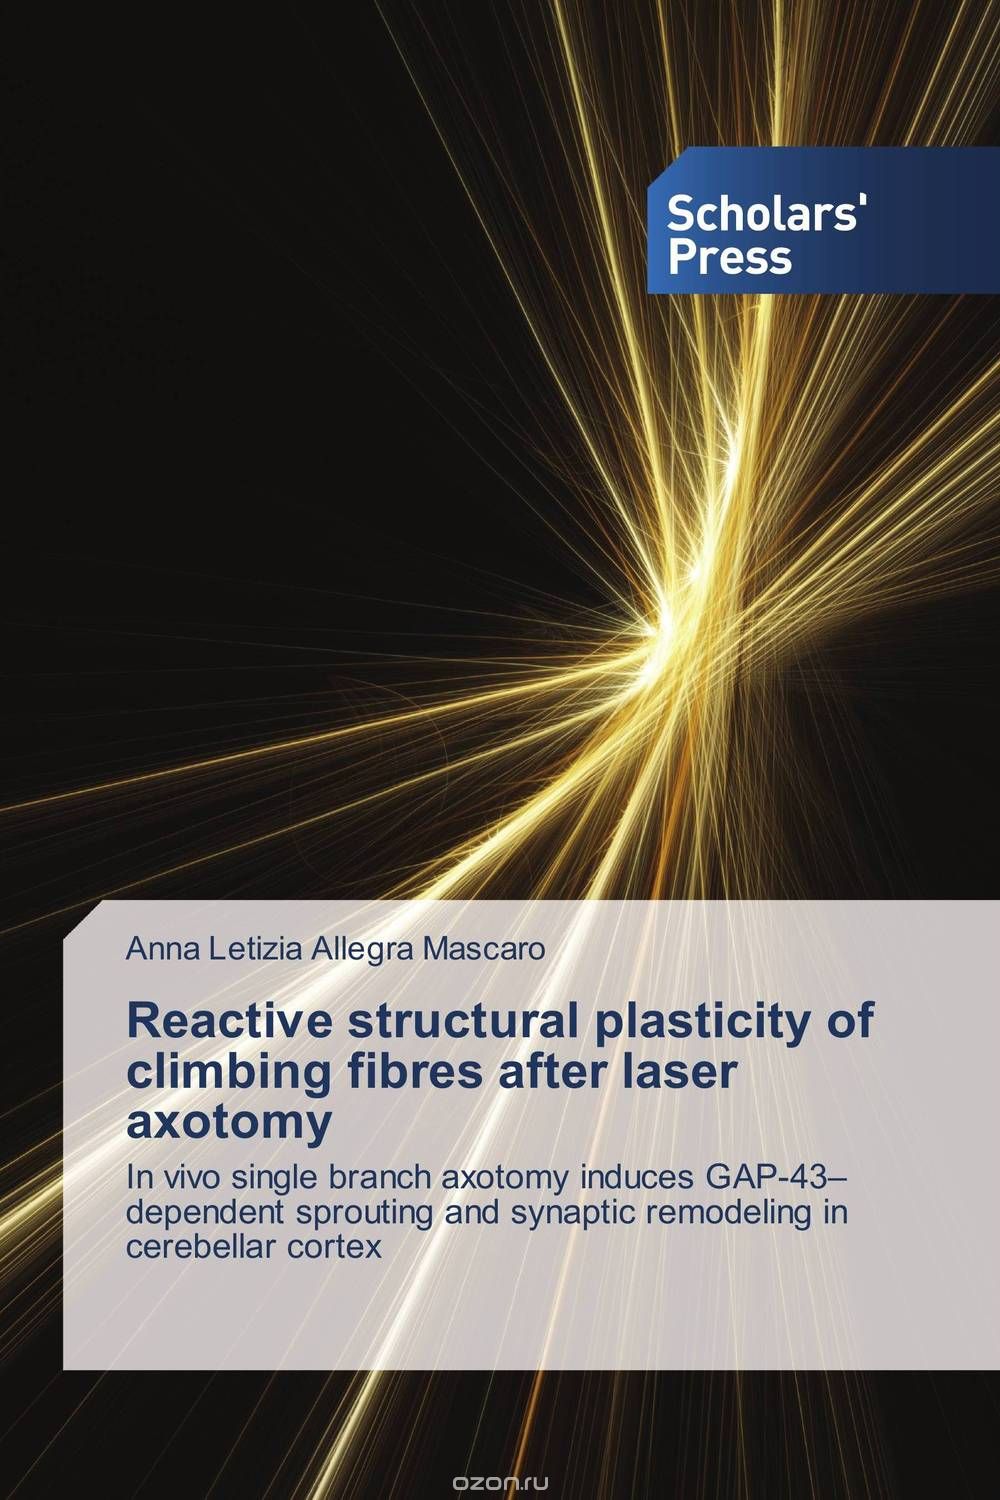 Скачать книгу "Reactive structural plasticity of climbing fibres after laser axotomy"